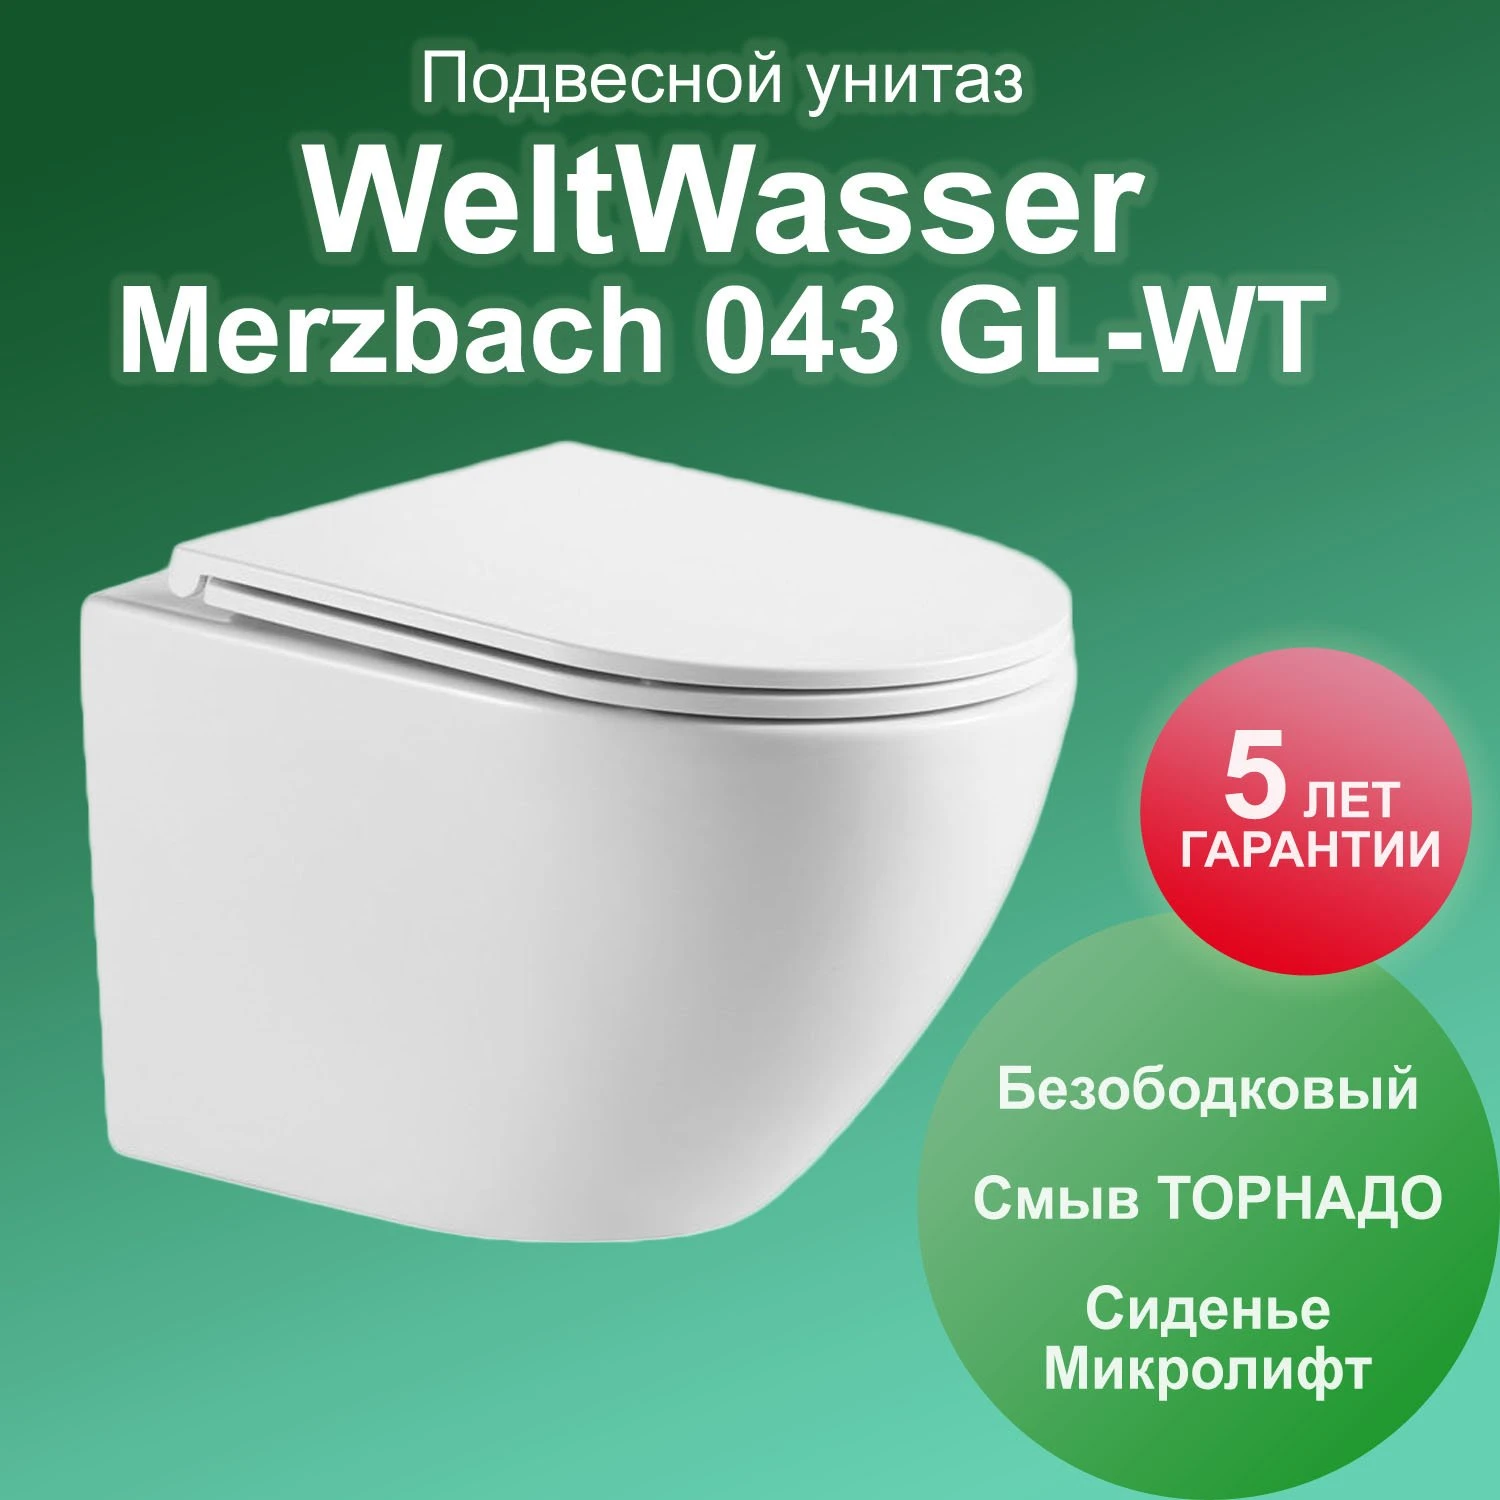 Комплект: Weltwasser Инсталляция Bamberg 460+Кнопка Bamberg WT белая+Merzbach 043 GL-WT белый унитаз - фото 1